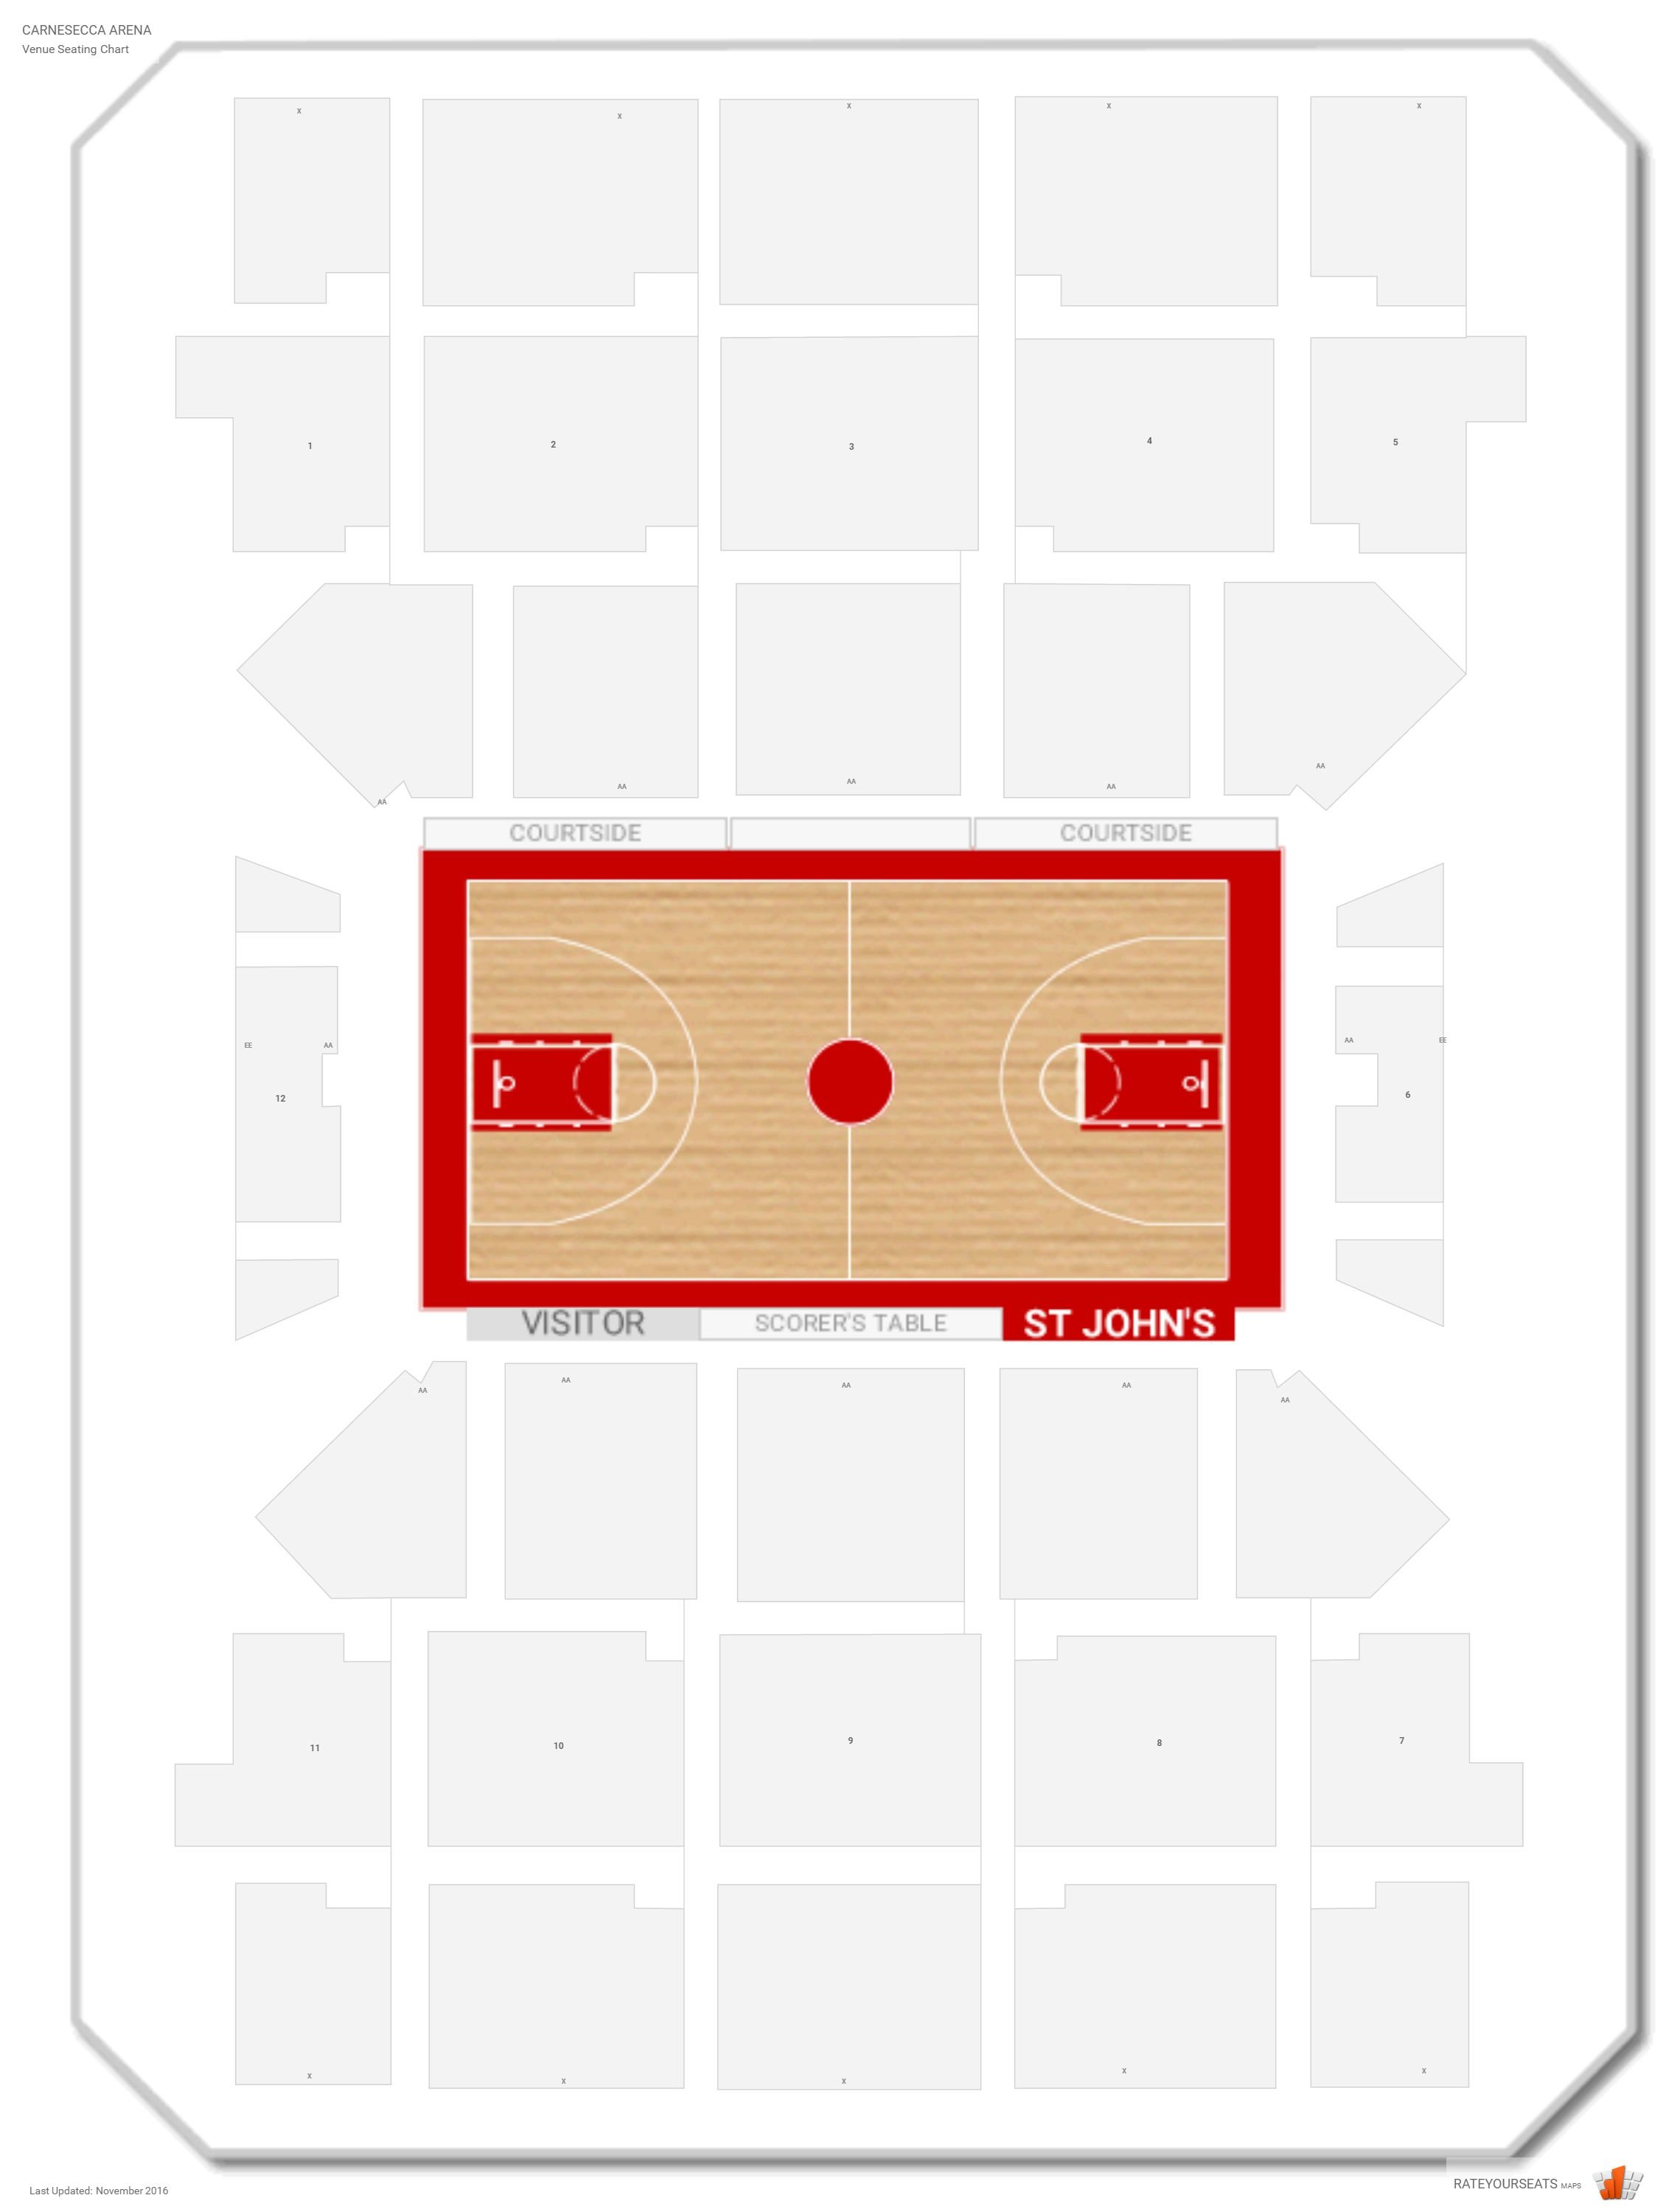 St John Arena Seating Chart